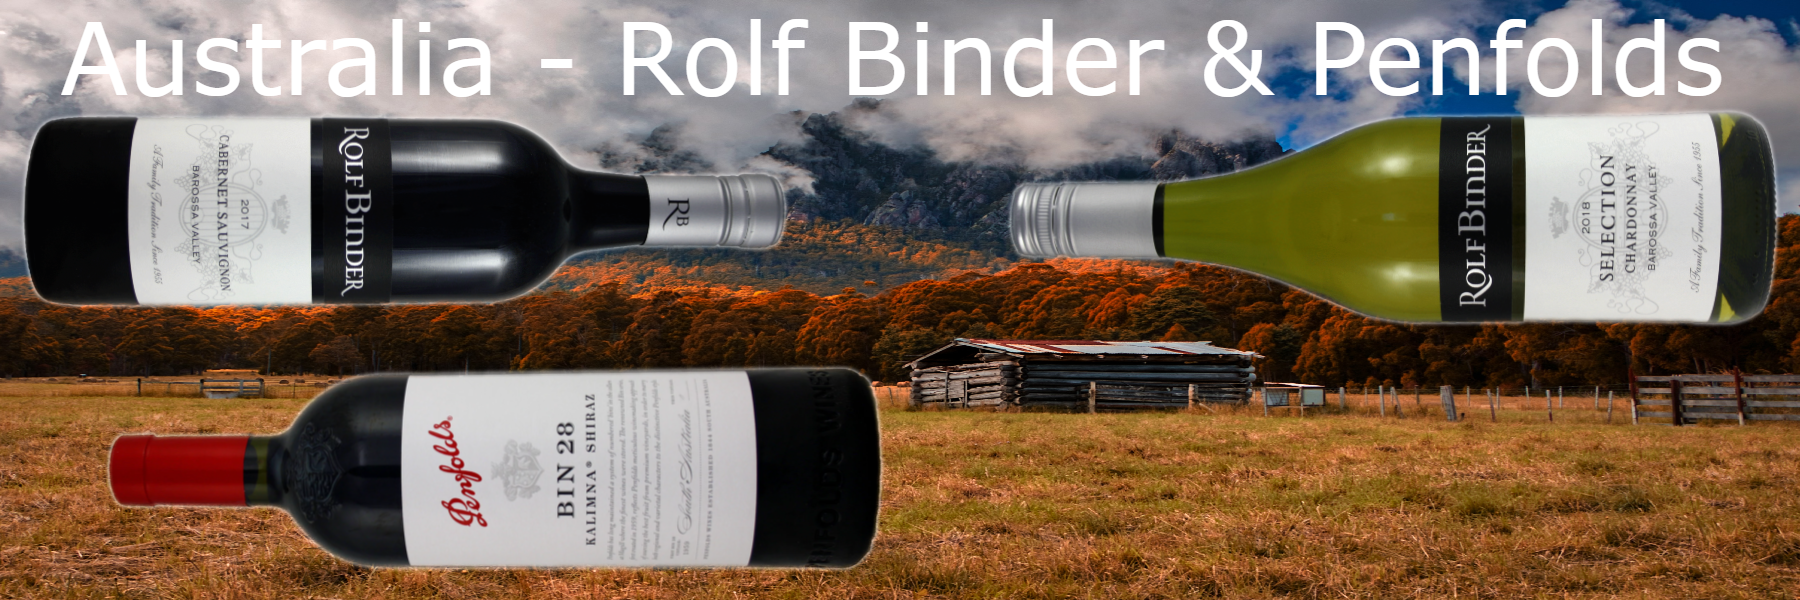 Australia - Rolf Binder & Penfolds